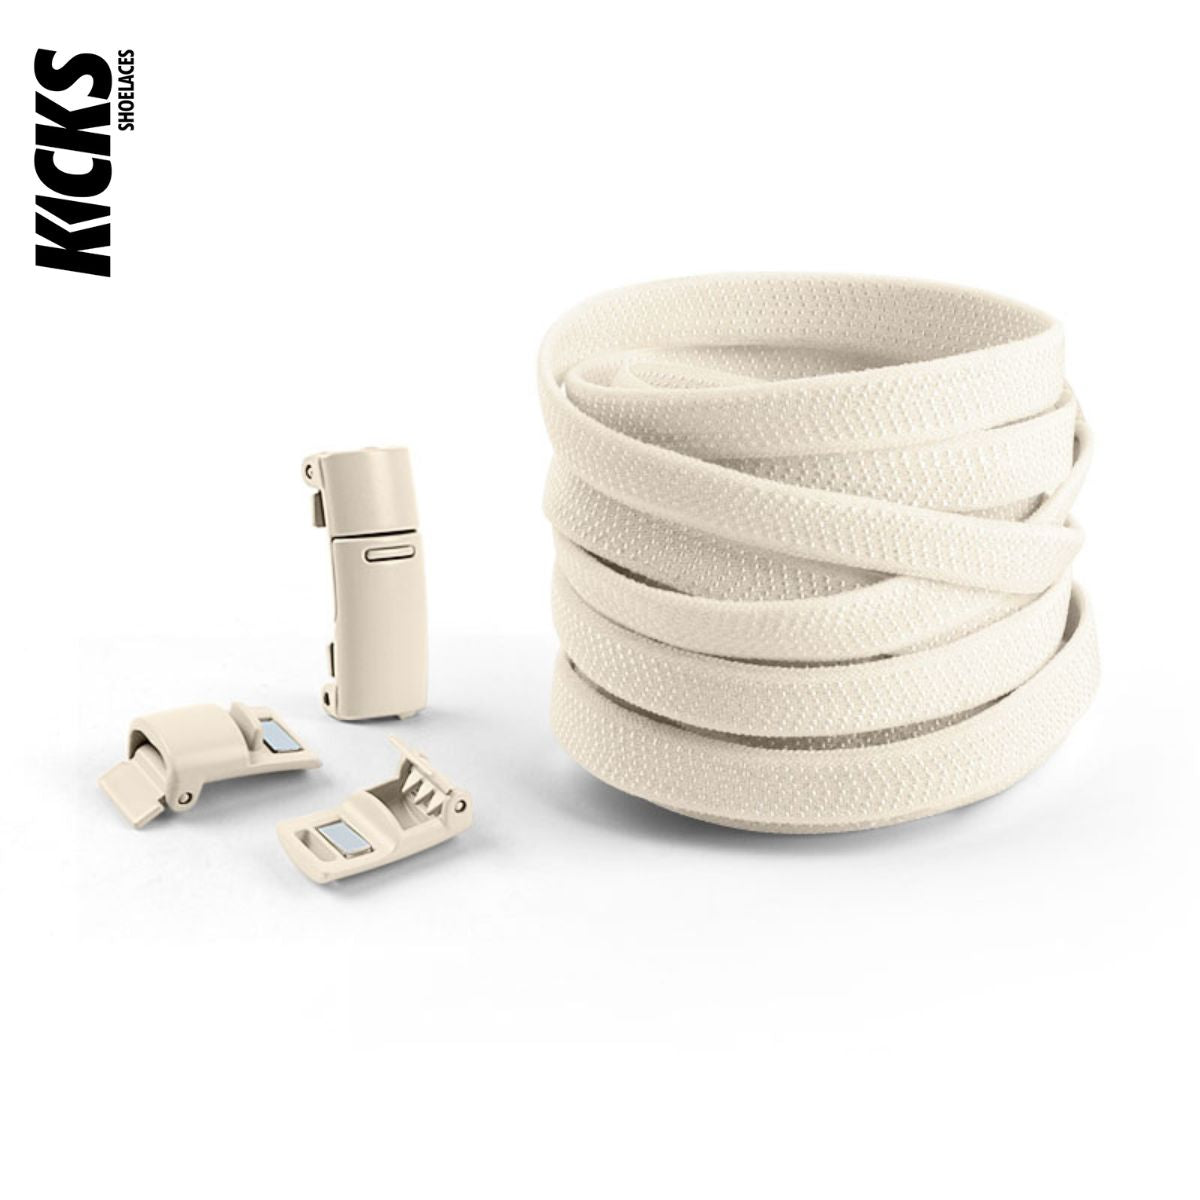 No-Tie Shoelaces with Magnetic Locks - Kicks Shoelaces